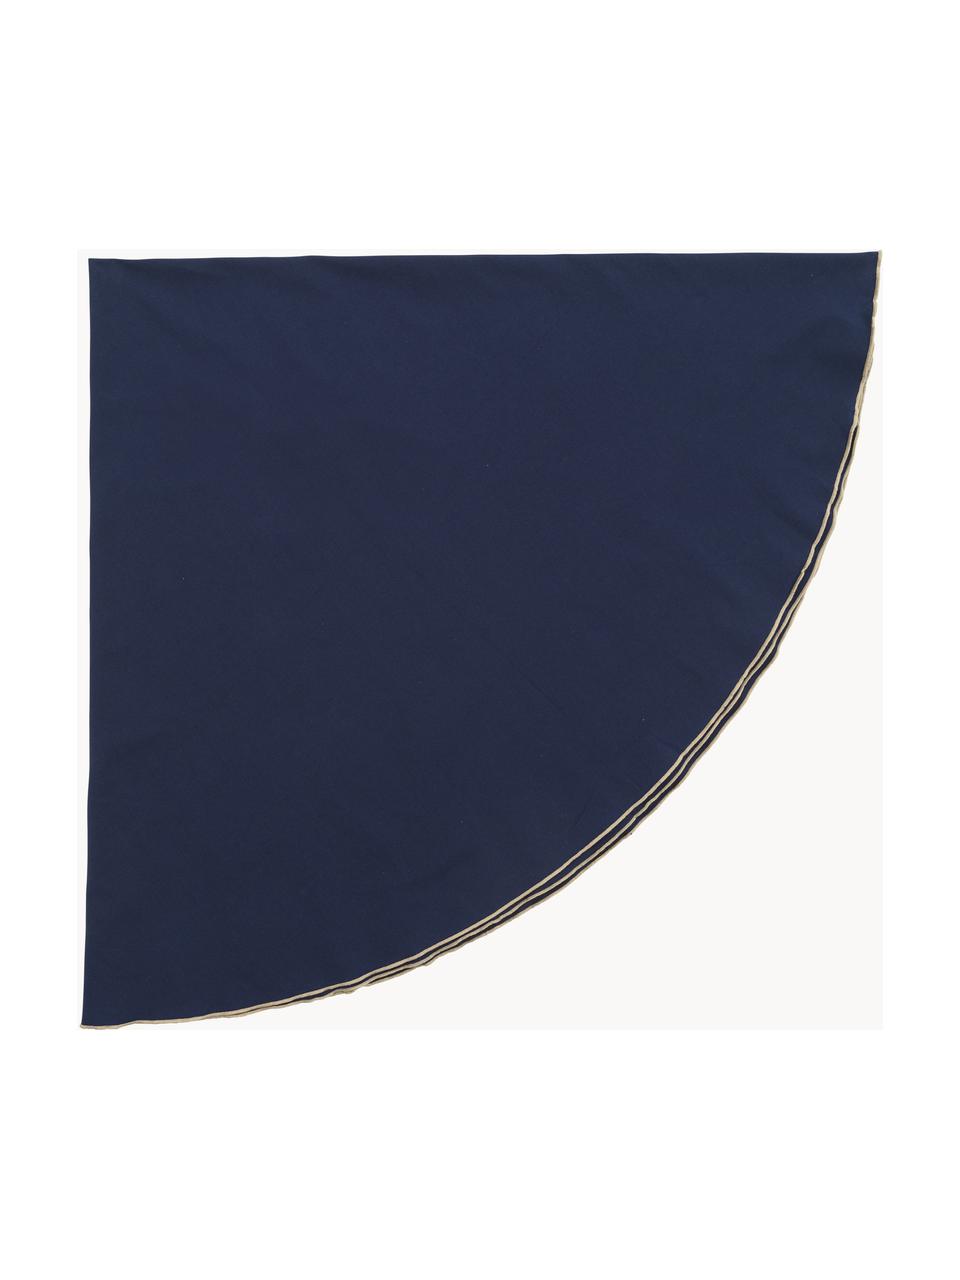 Mantel redondo Wilhelmina, 100% algodón, Azul oscuro, De 6 a 8 comensales (Ø 200 cm)